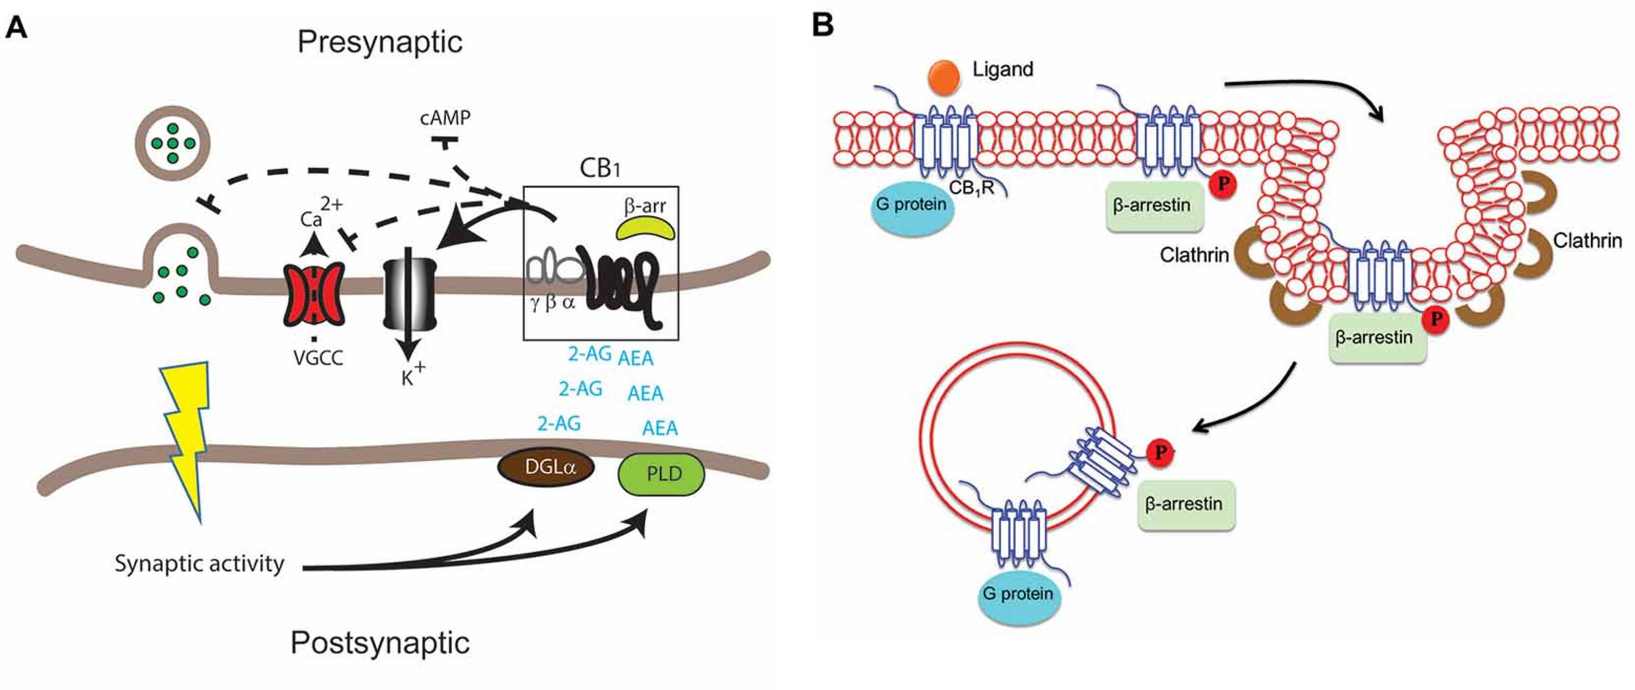 Signaling pathway of cannabinoid receptors